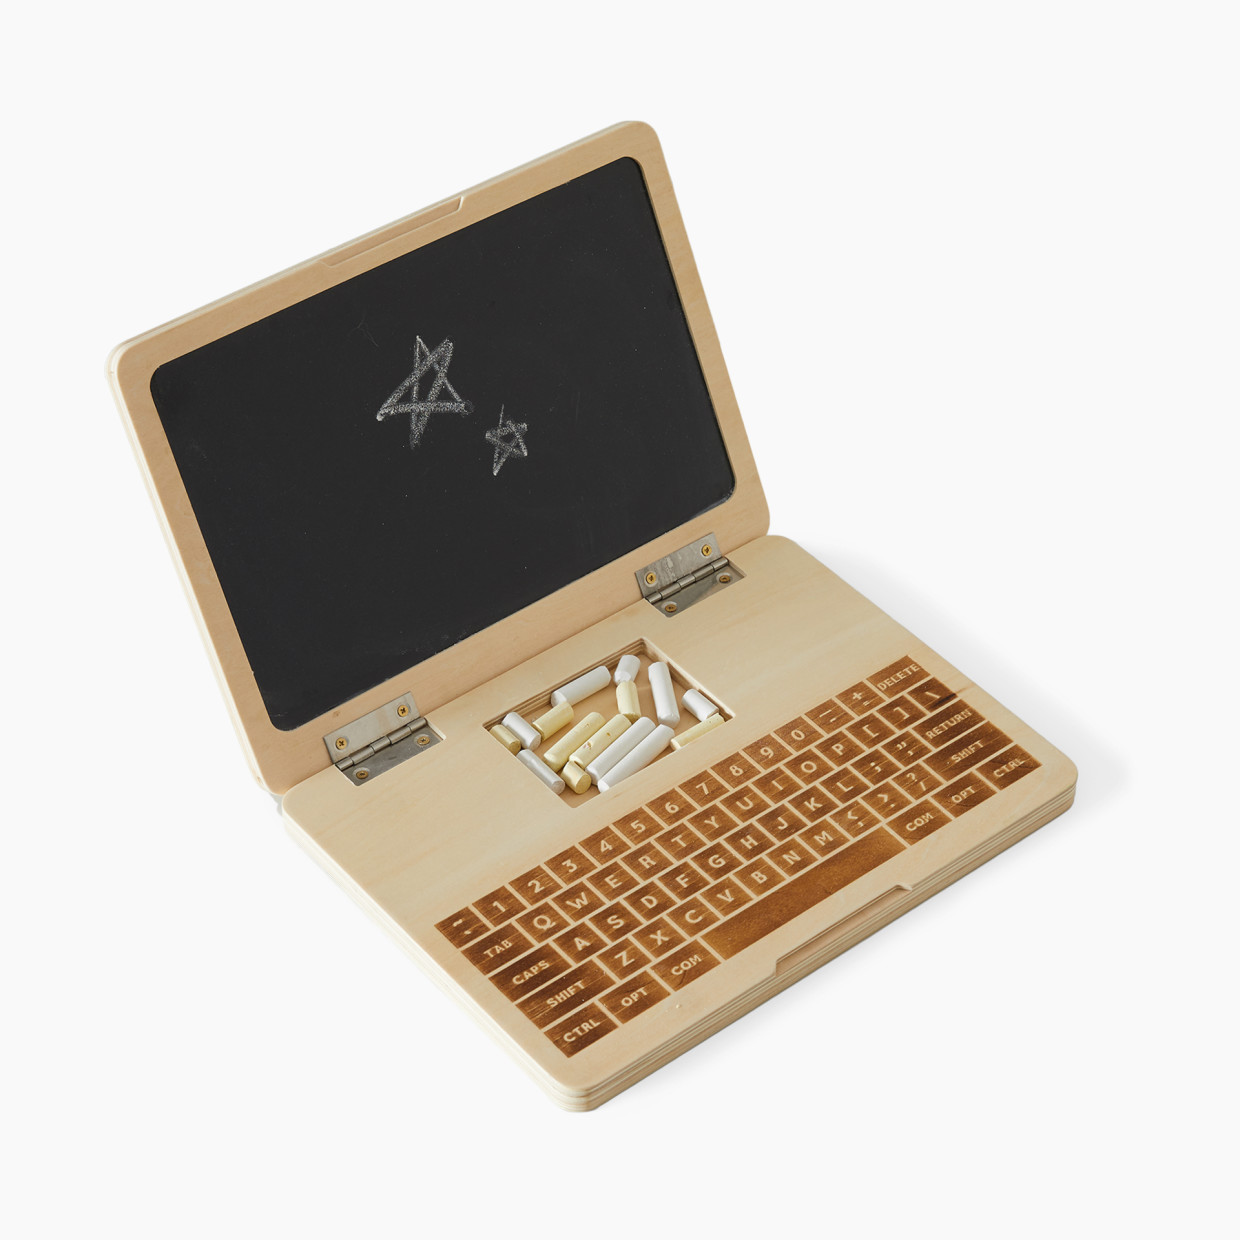 Wonder & Wise Nonstop Laptop Wooden Toy.